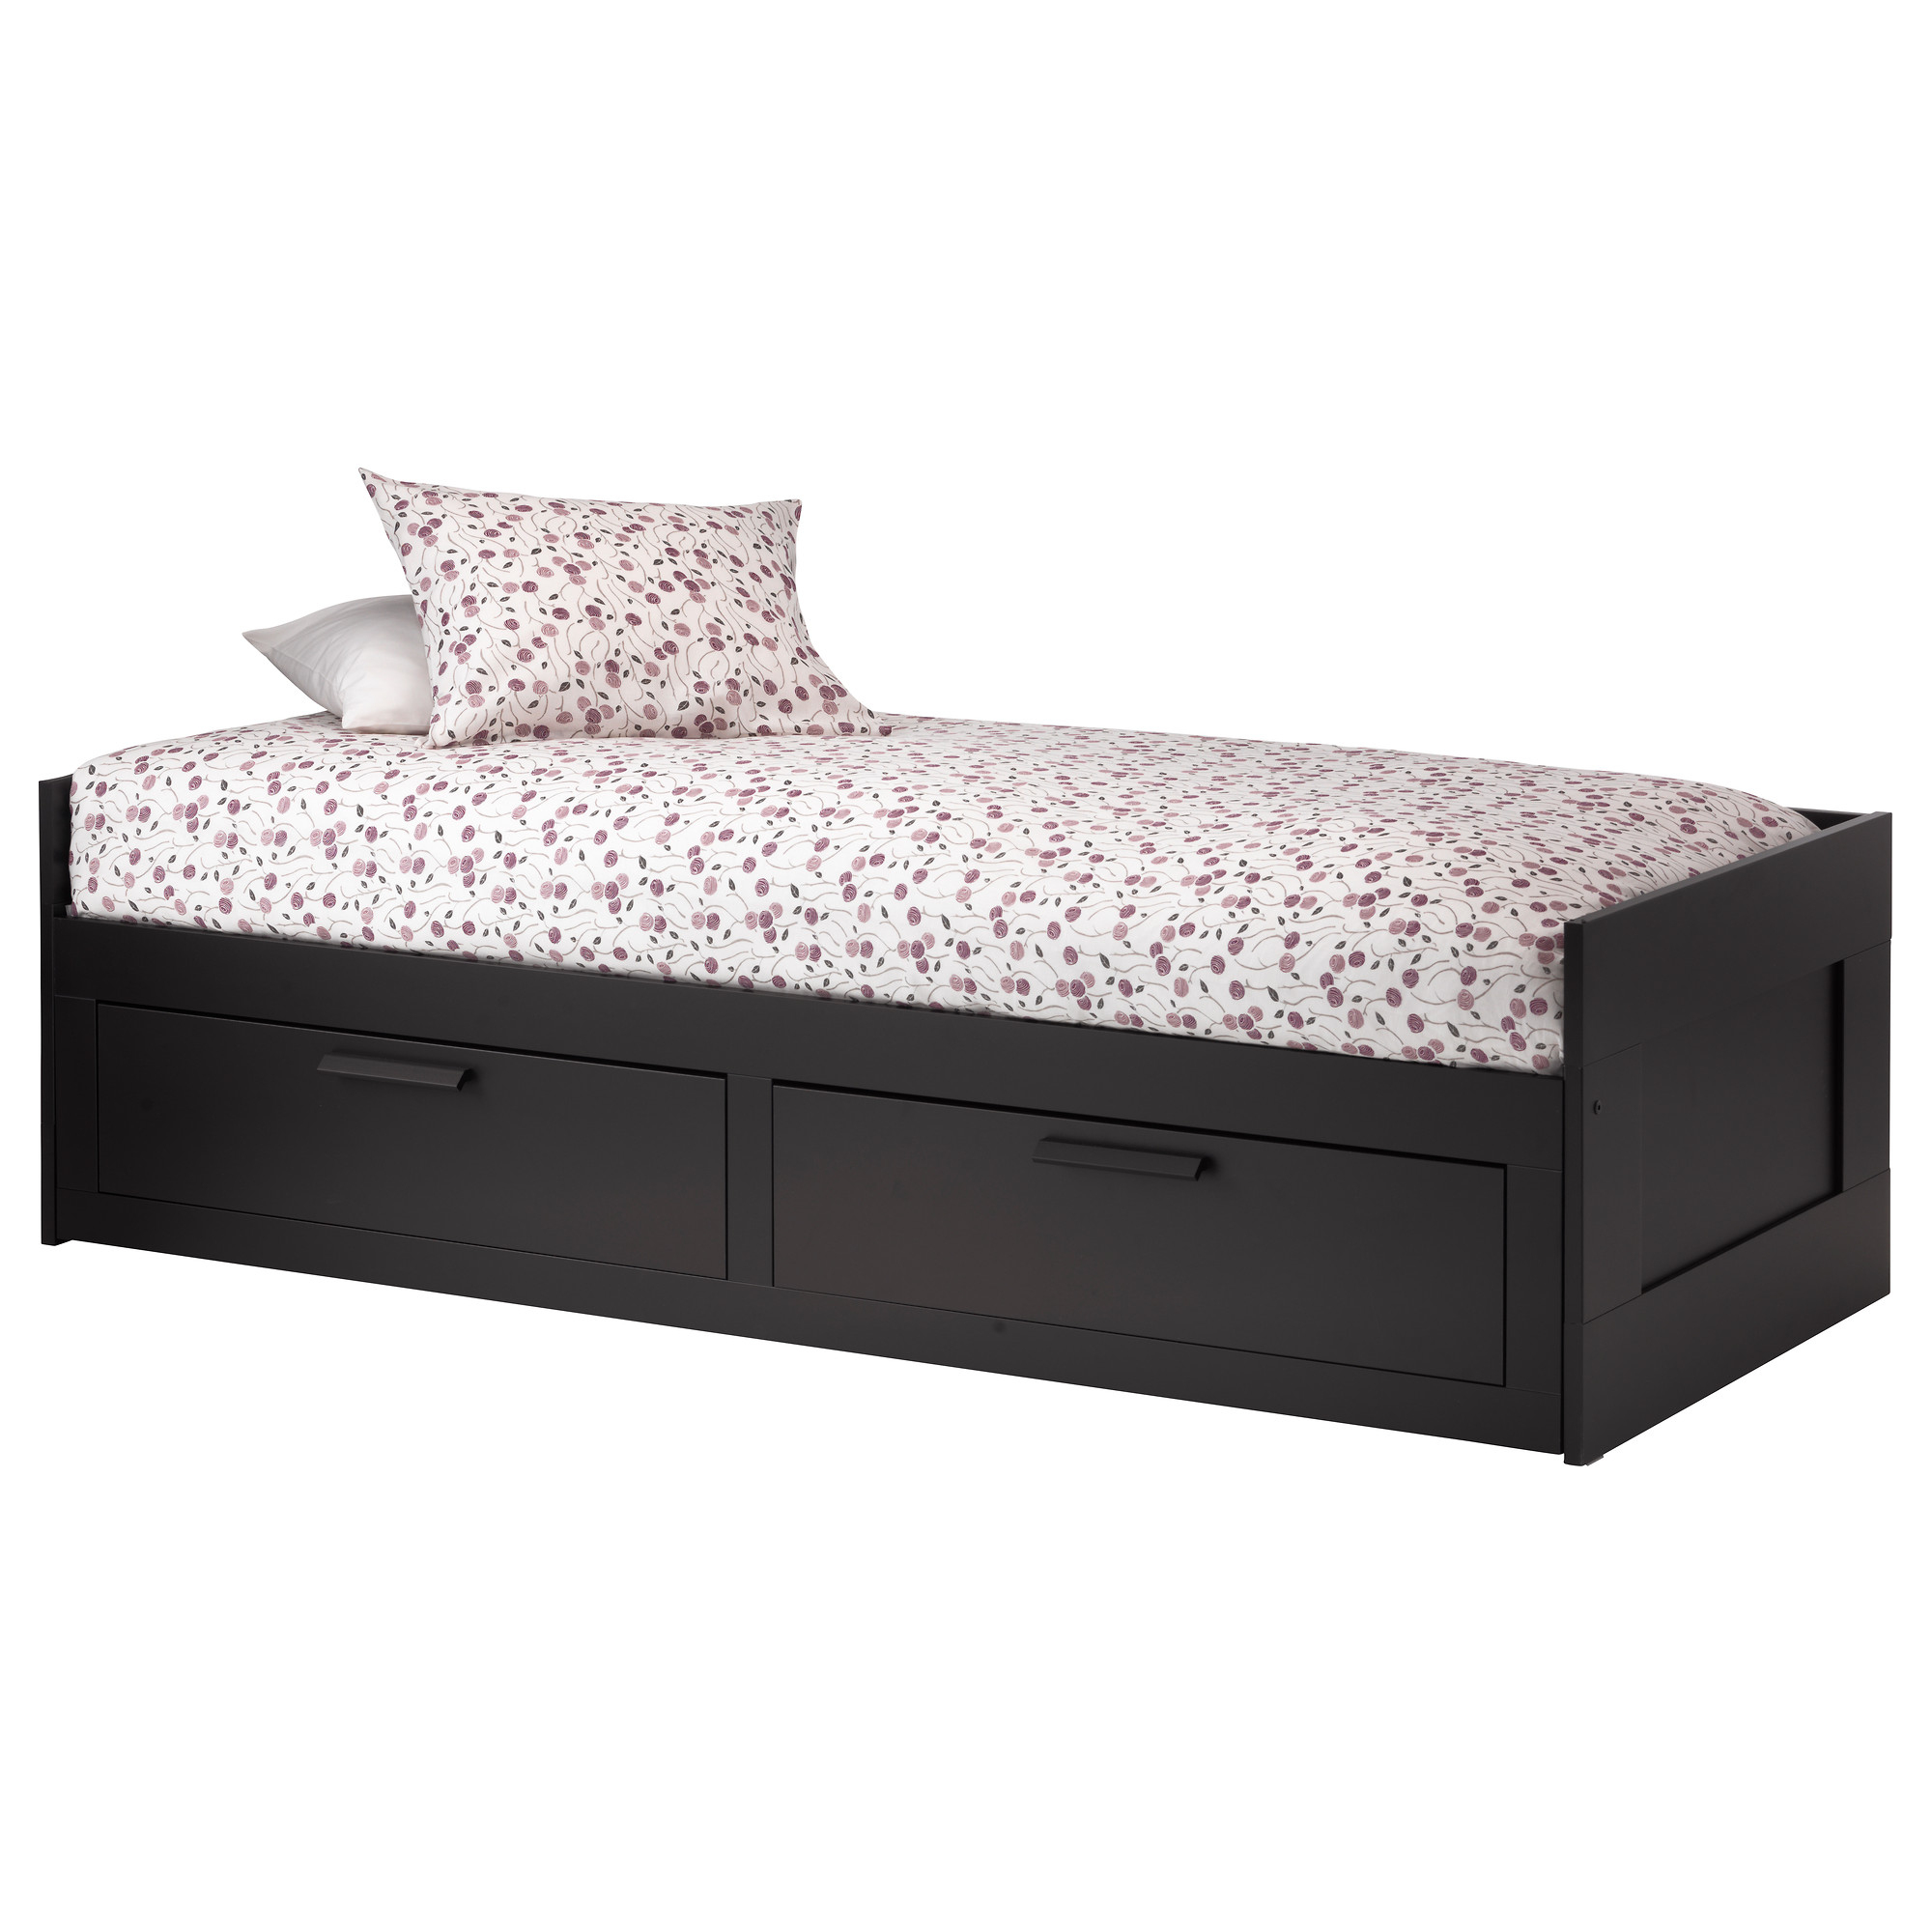 The Comfortable And Beautiful Designs Of Ikea Bed Frame ... destiné Lit Futon Ikea